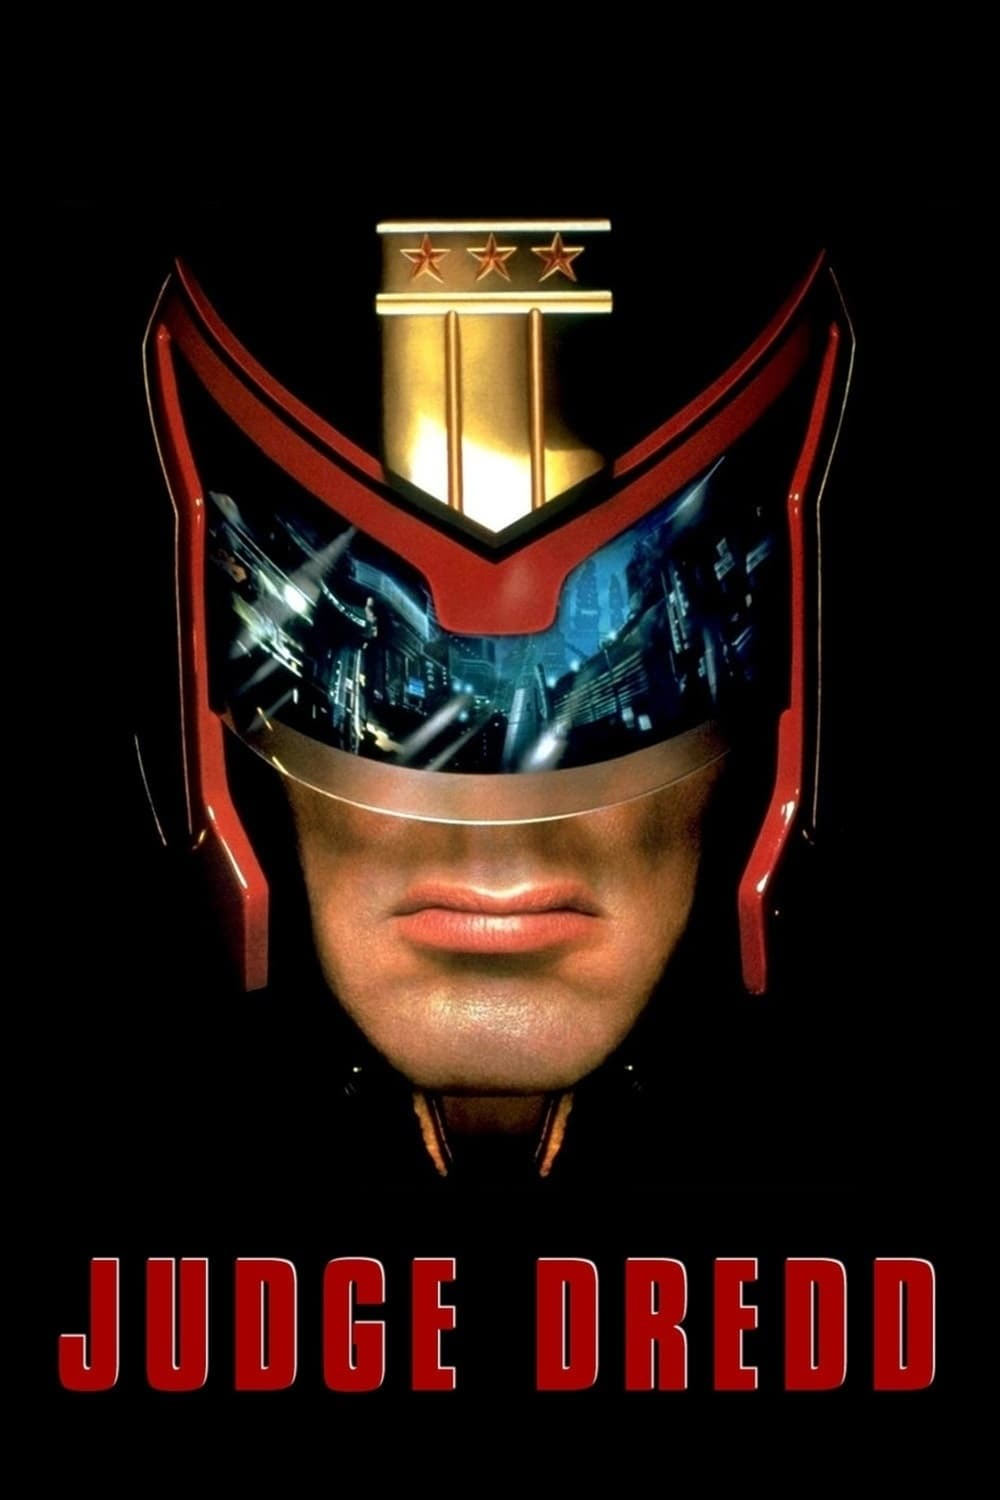 Judge Dredd (1995) poster